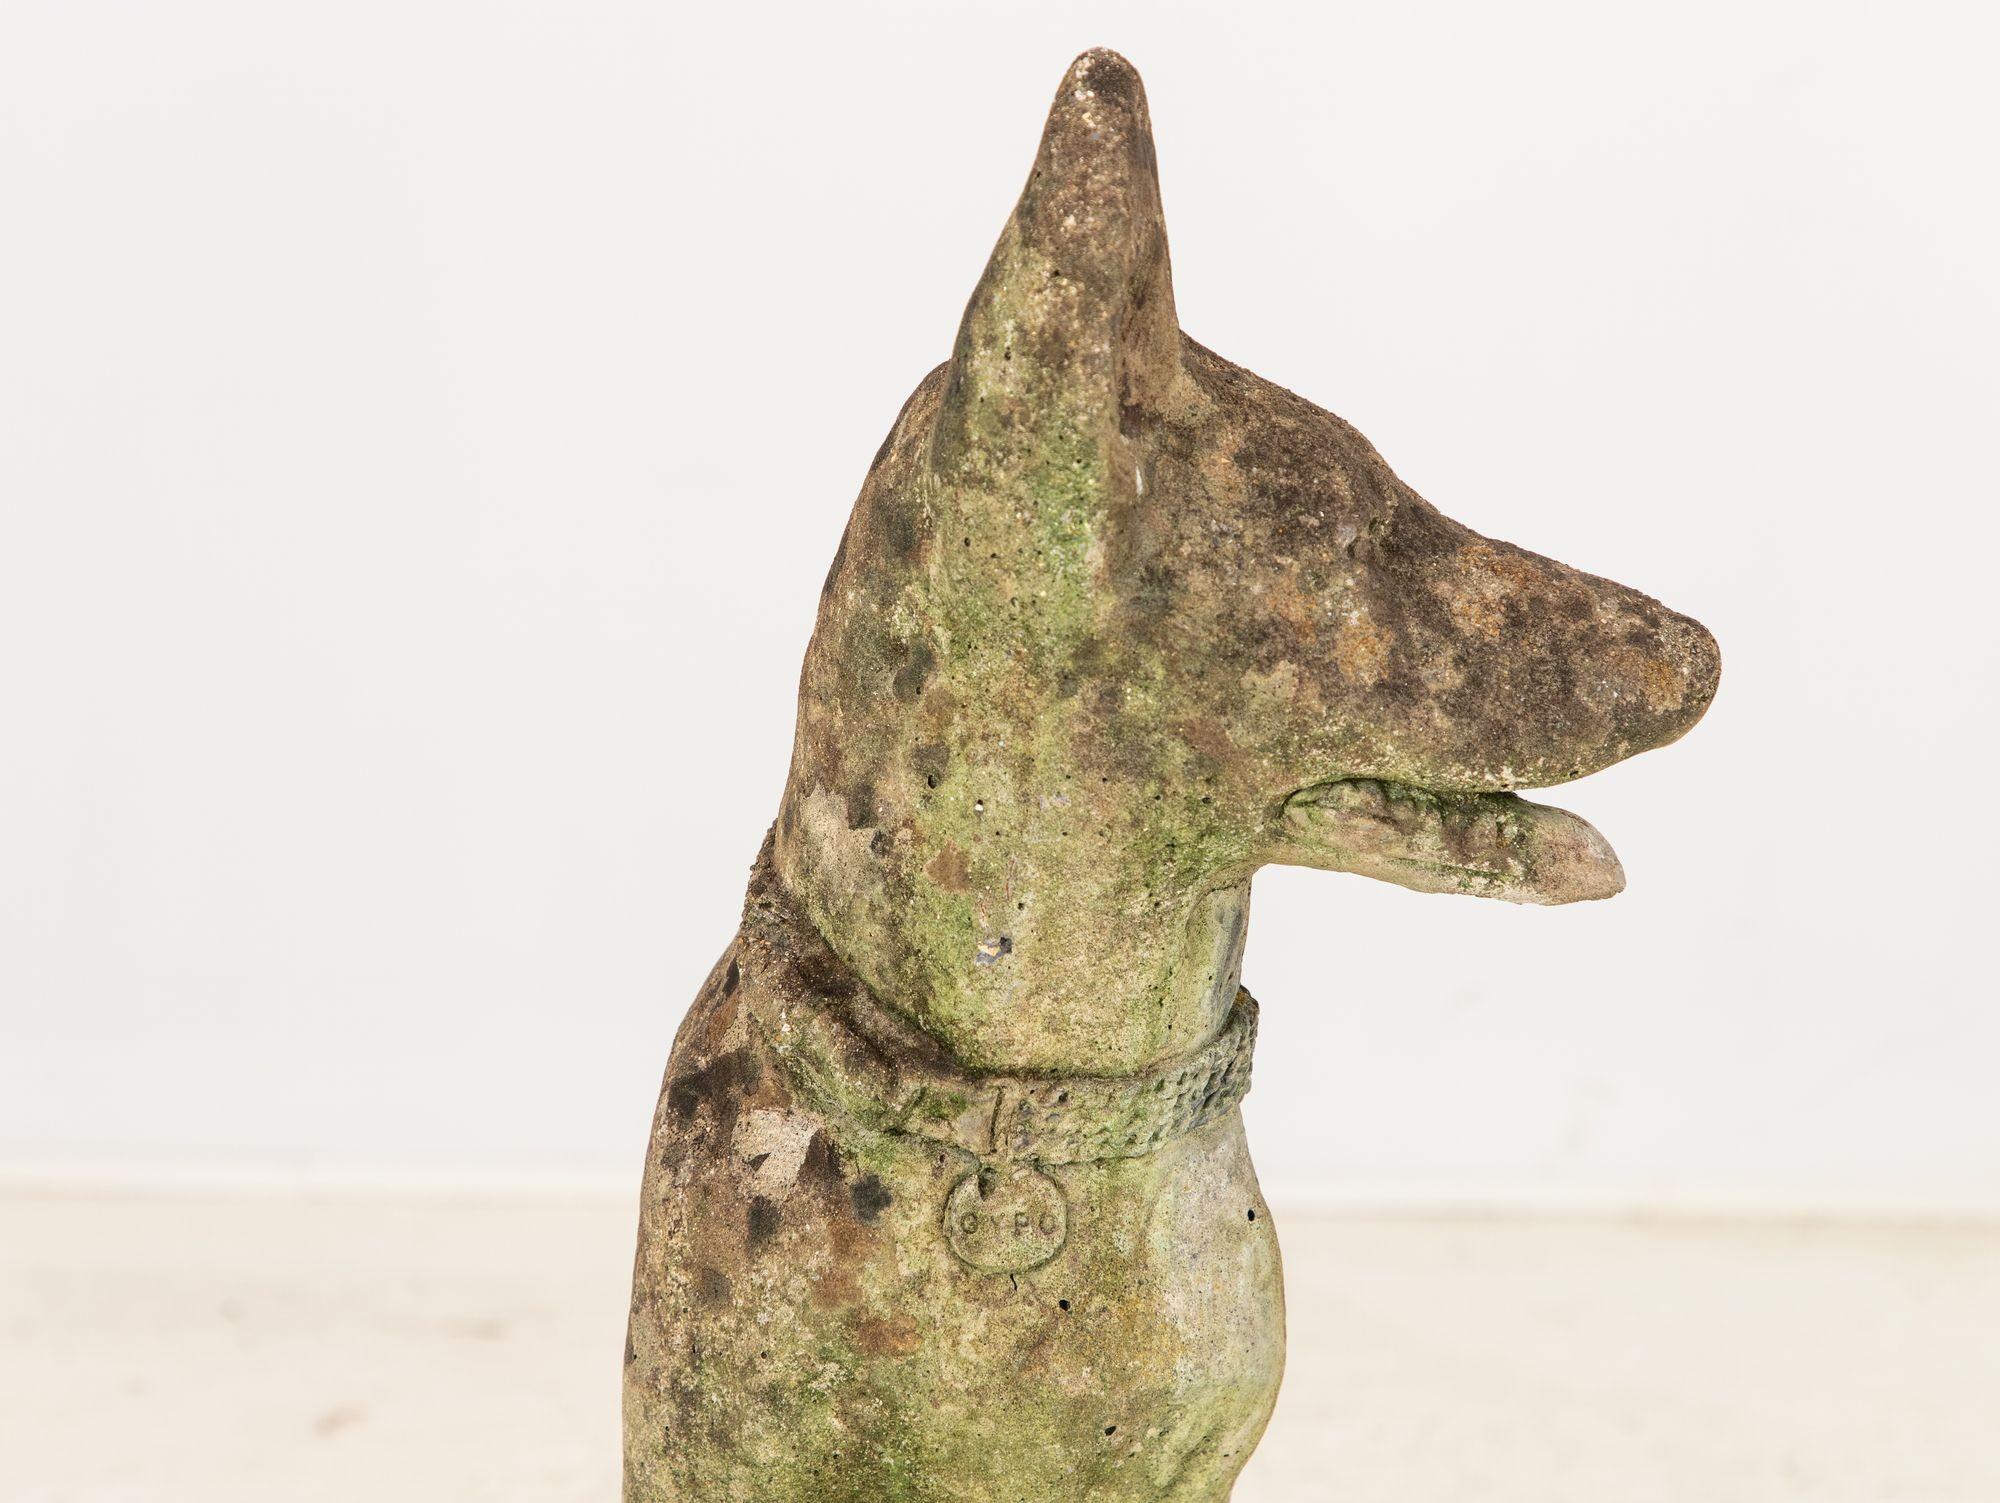 Concrete Shepherd Dog Garden Ornament, English mid 20th Century For Sale 1